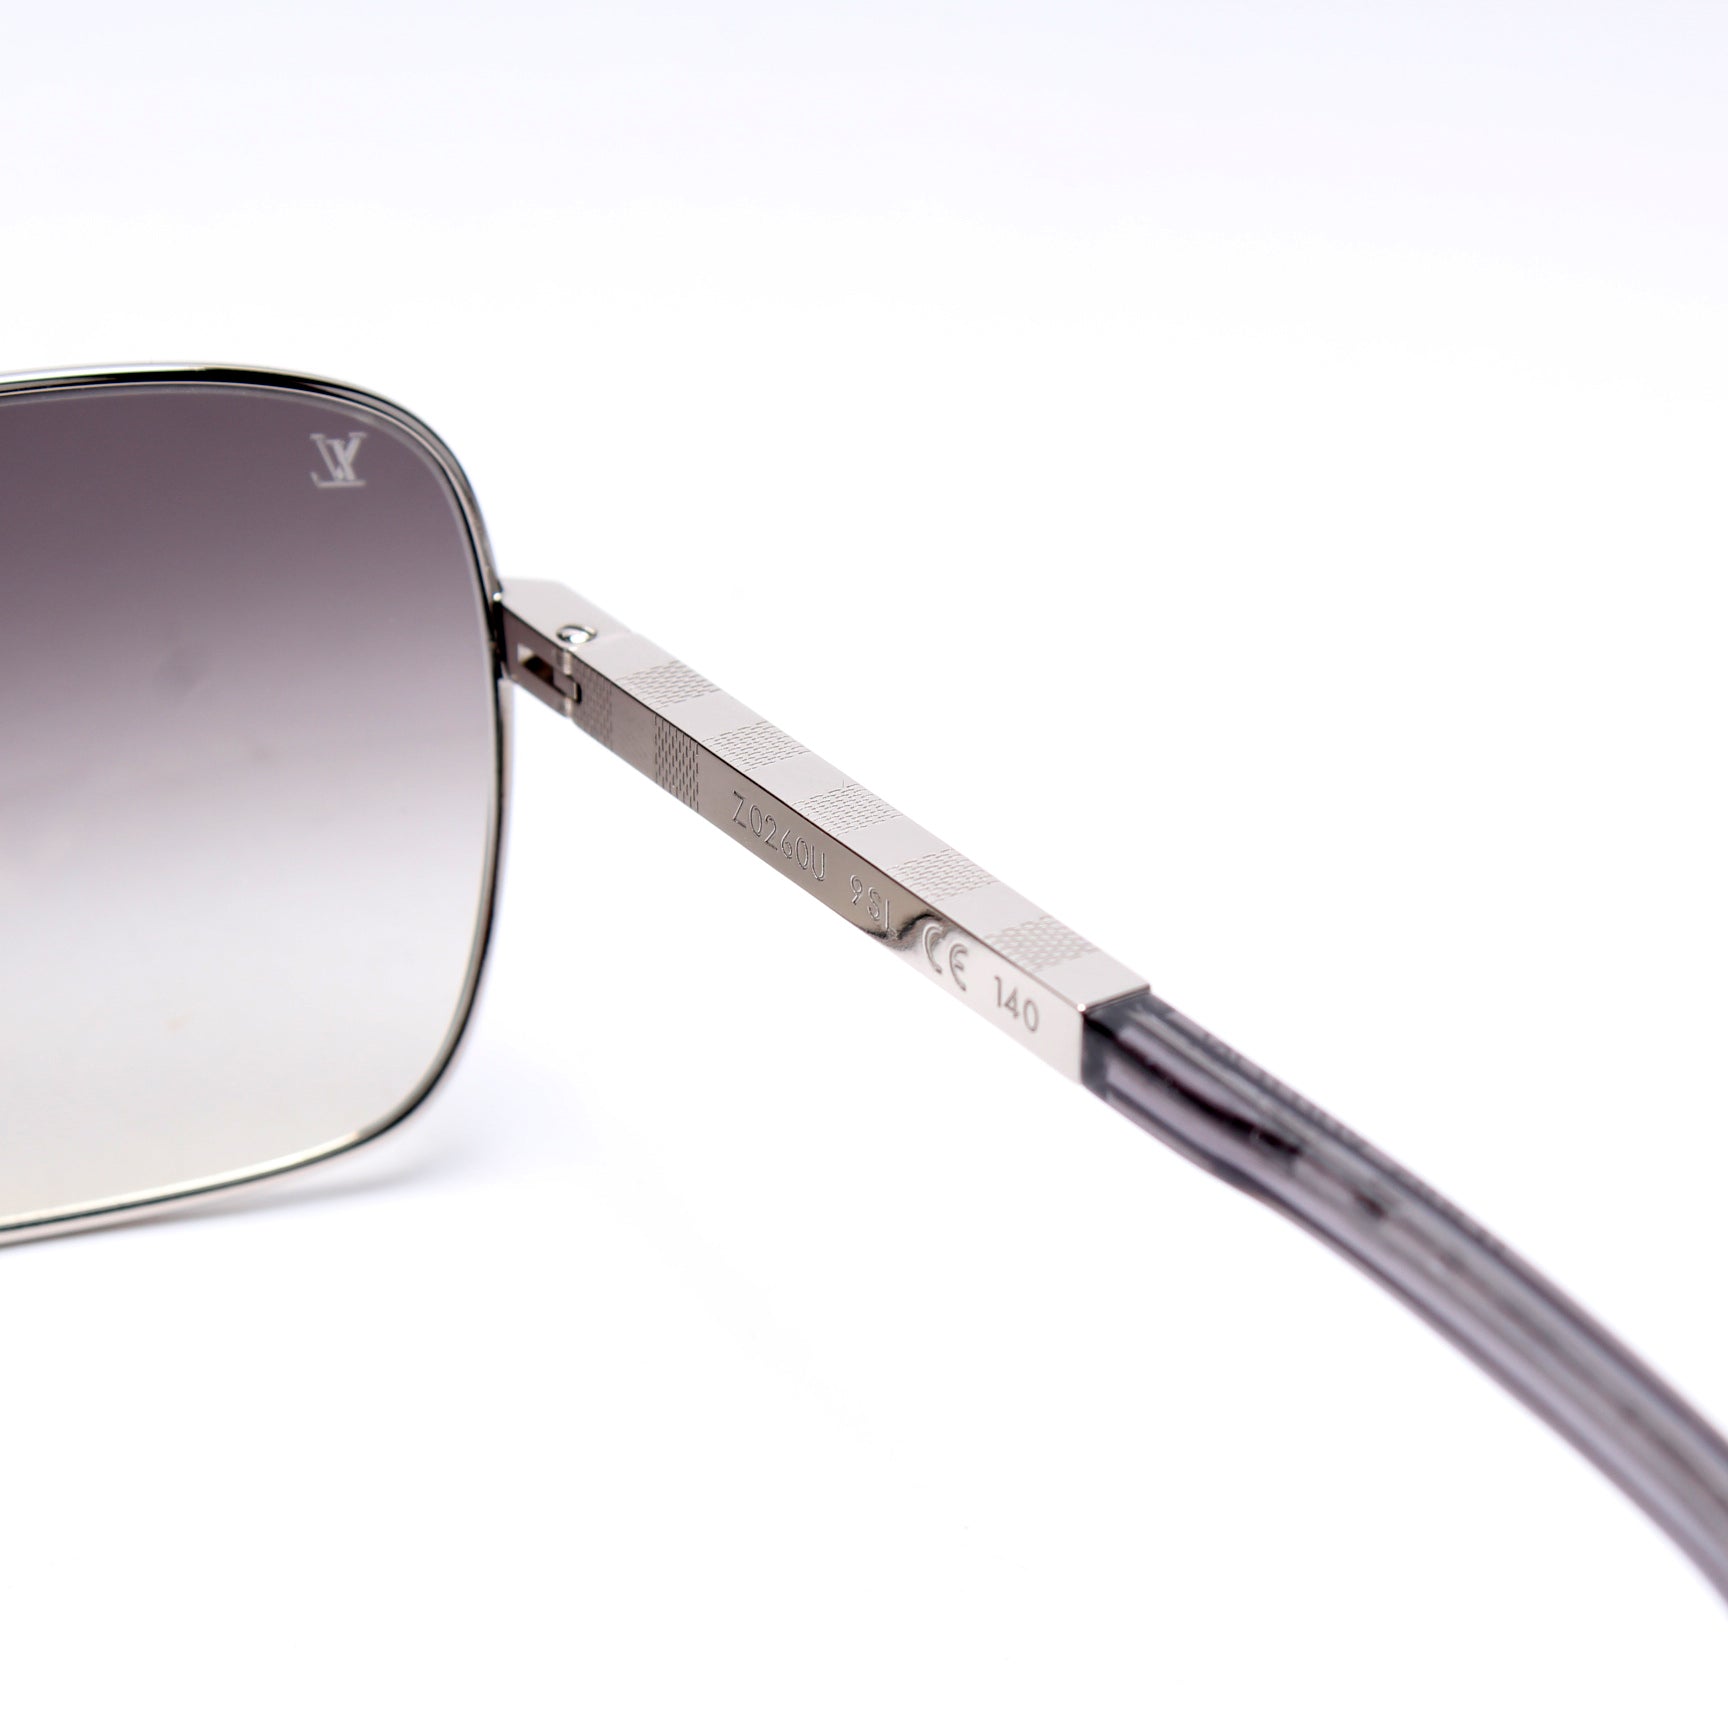 Lv Attitude Sunglasses Silver Frame